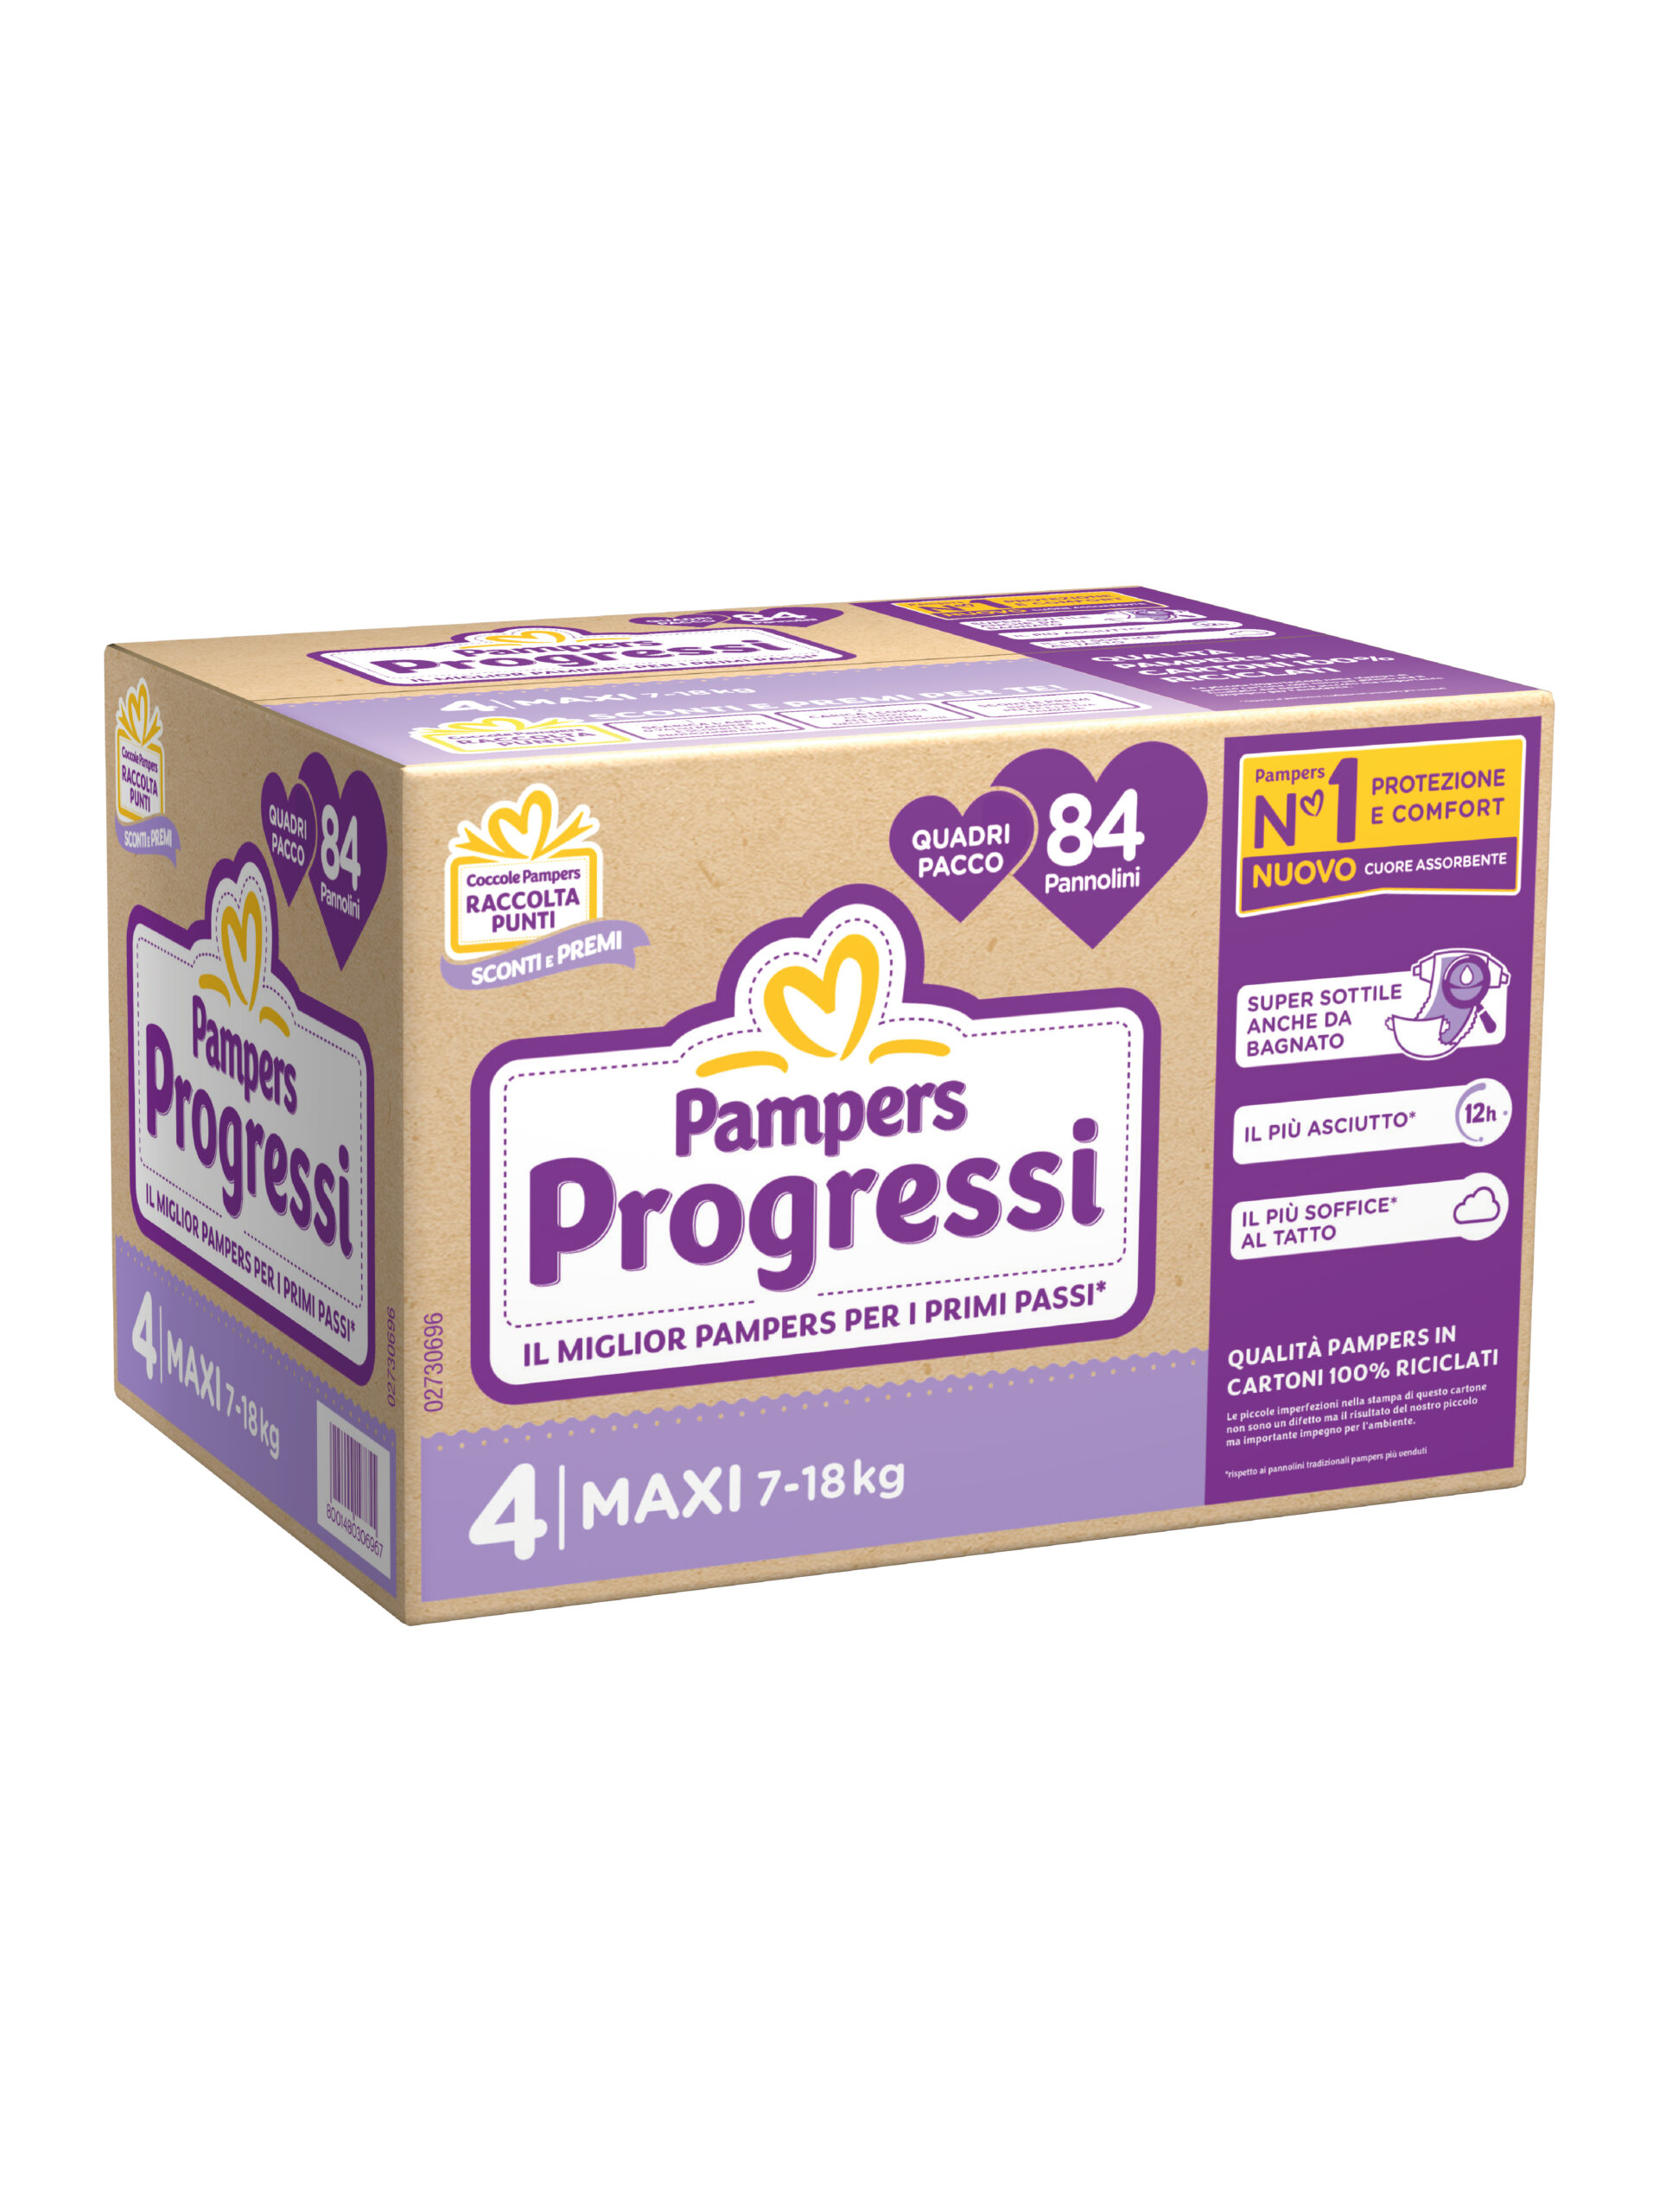 Pampers progressi maxi quadri pacco x84 - Pampers